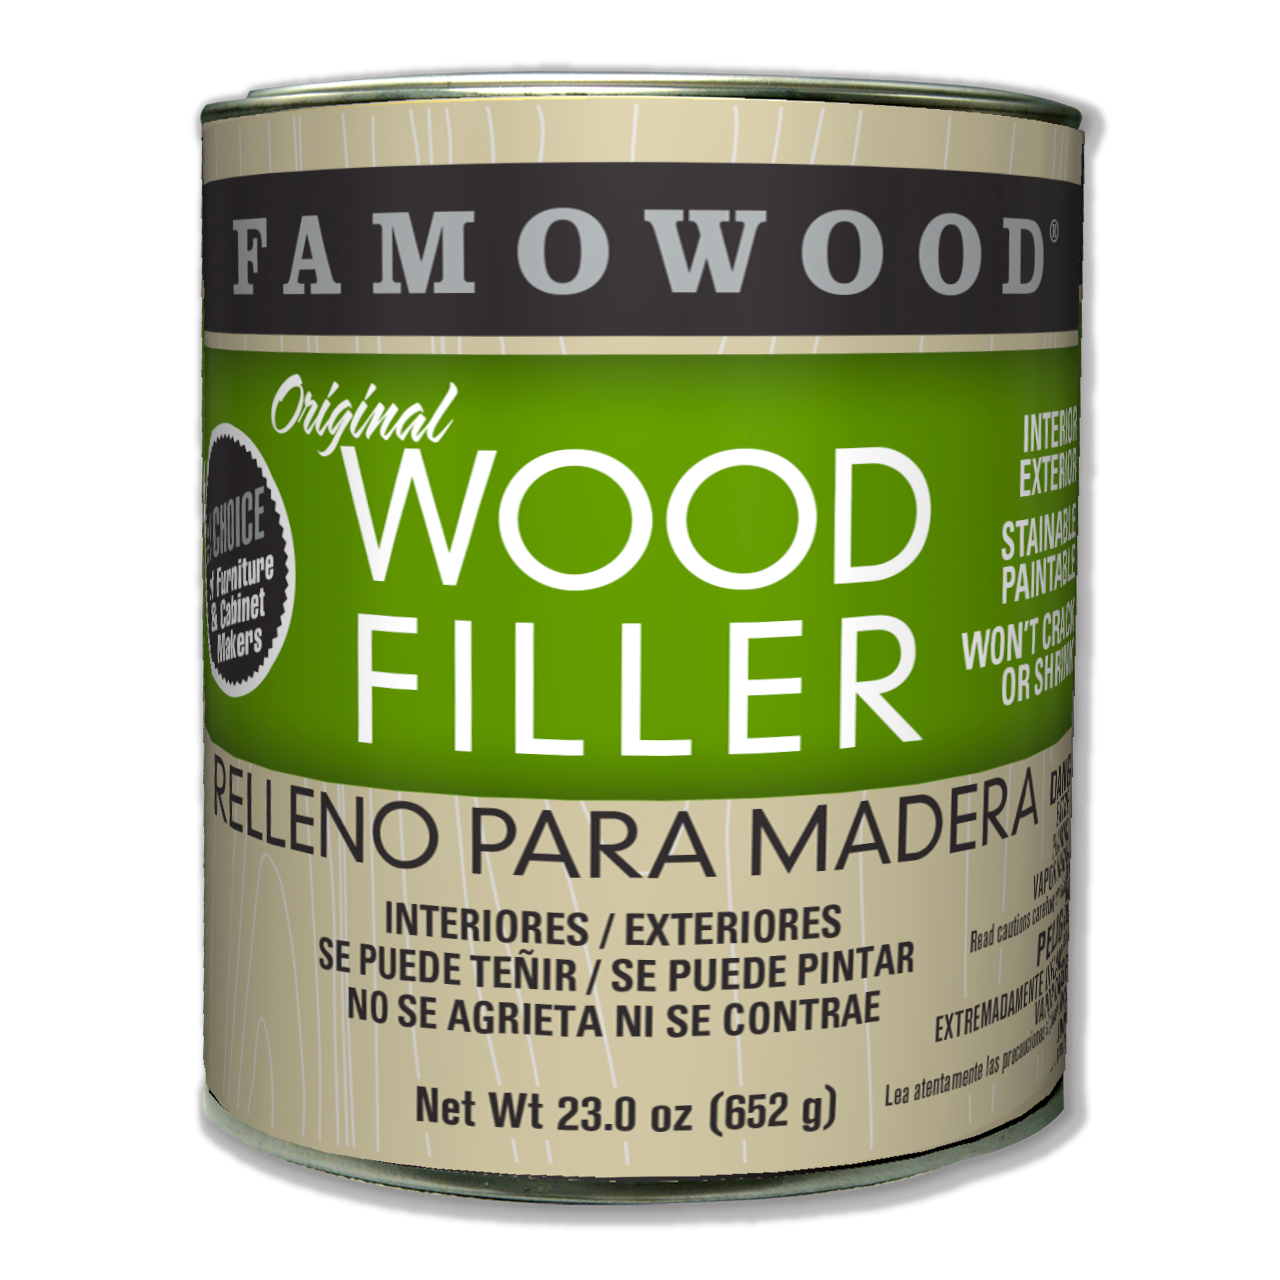 Famowood Birch Wood Filler, 23oz